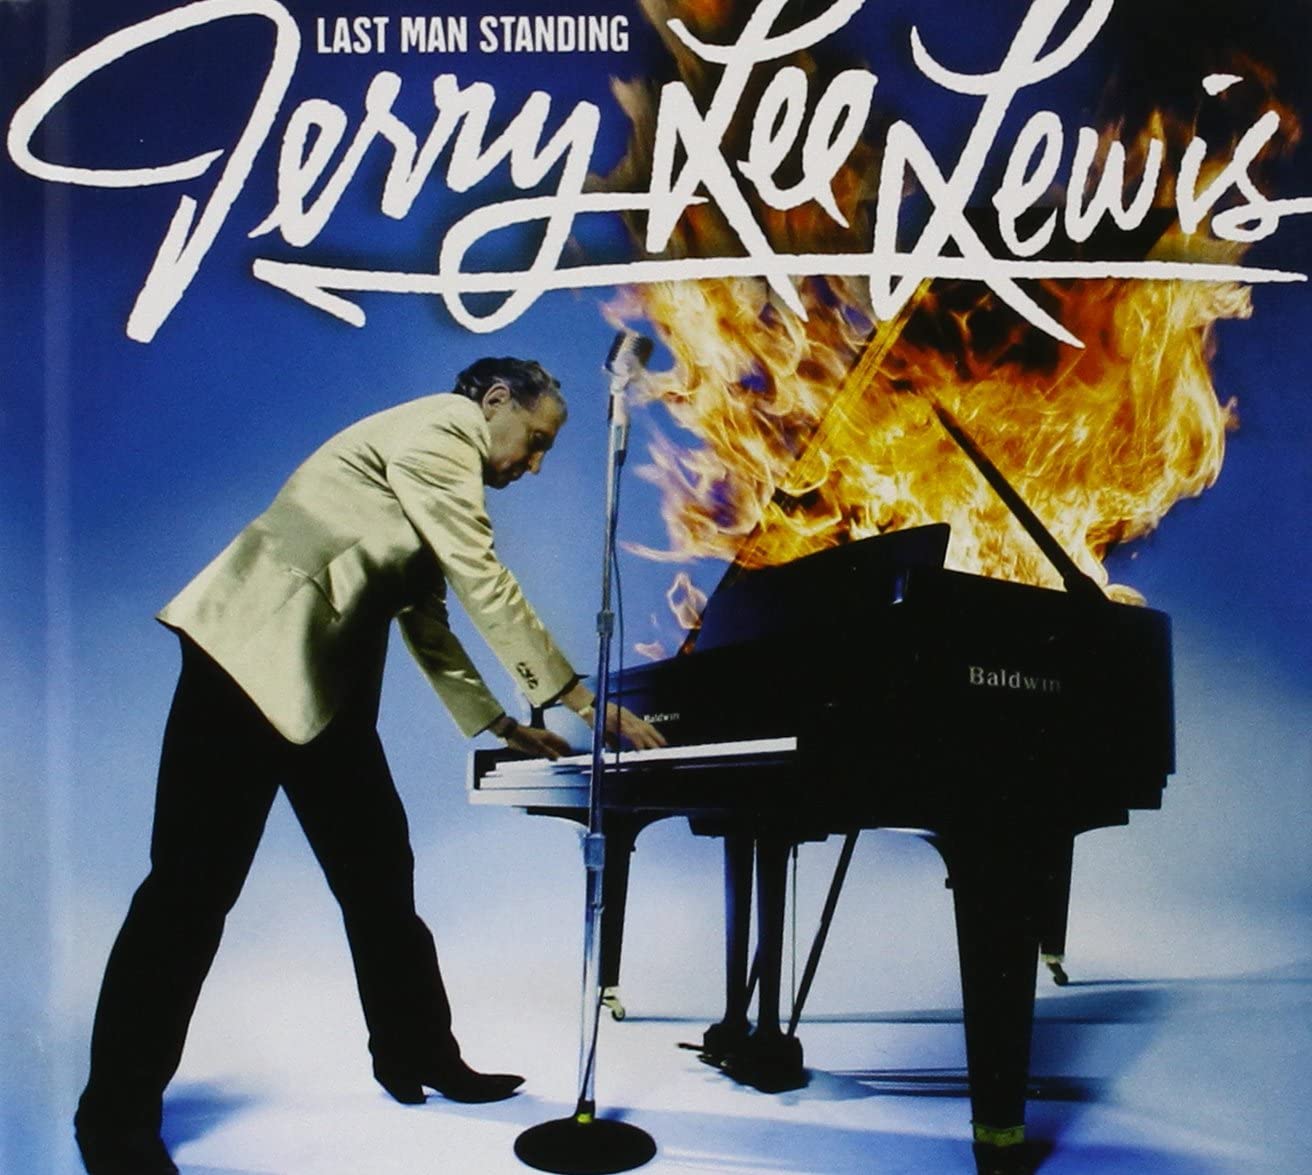 Jerry Lee Lewis - Last Man Standing - intervista